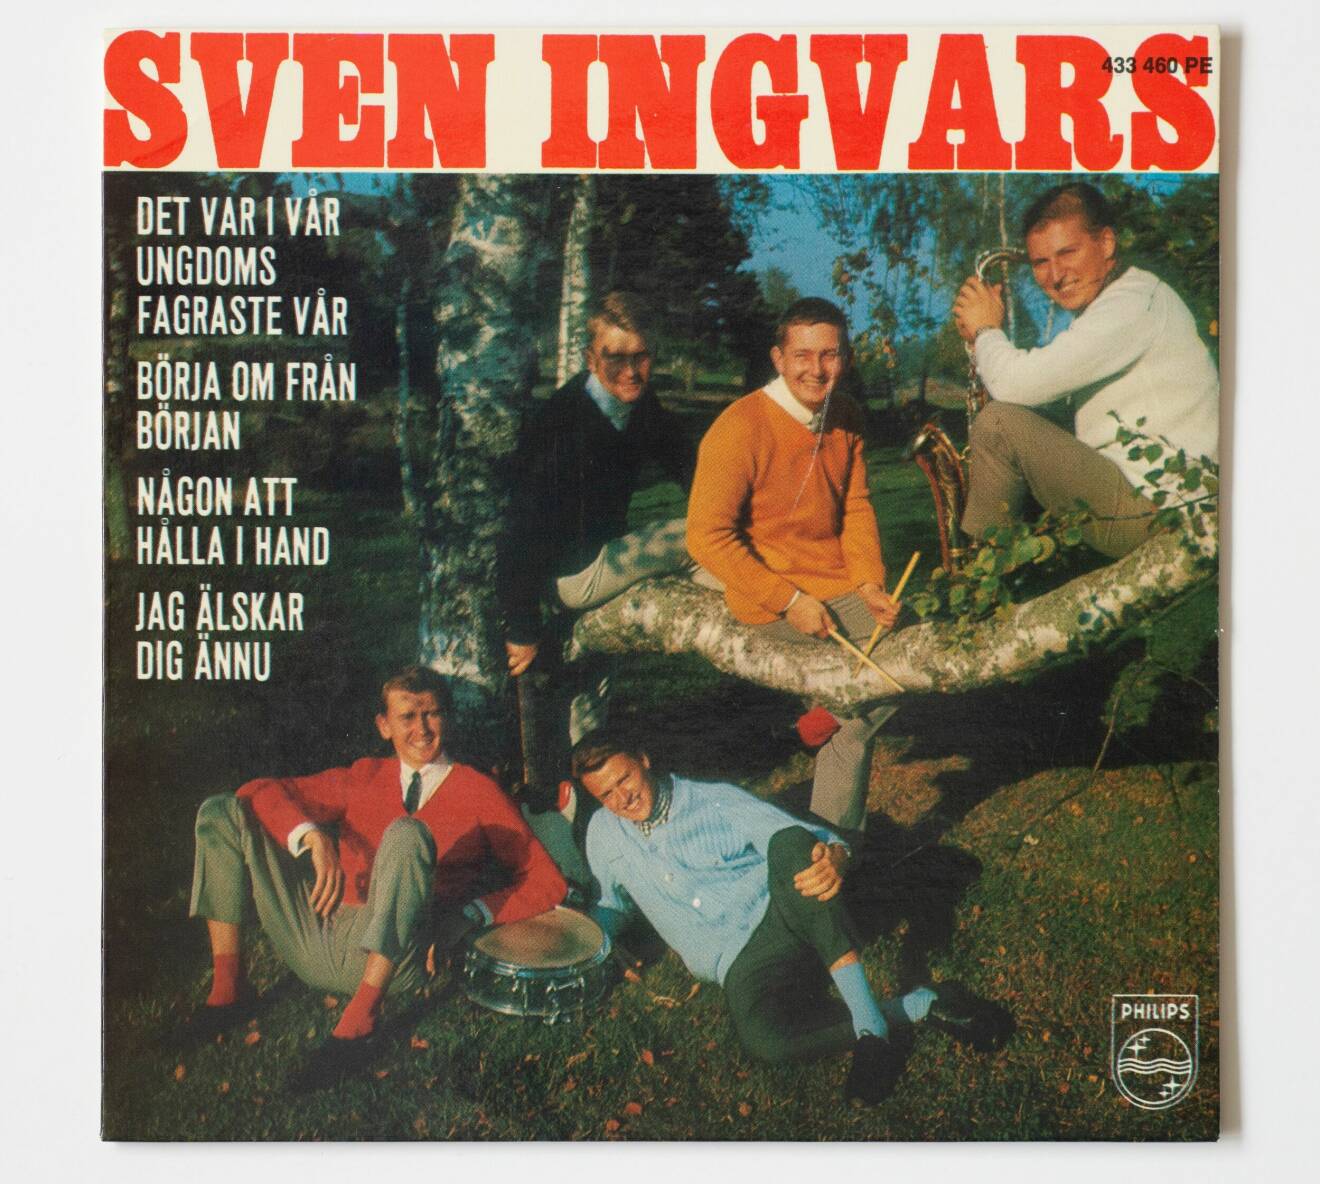 EP med Sven-Ingvars fråb 60-talet.